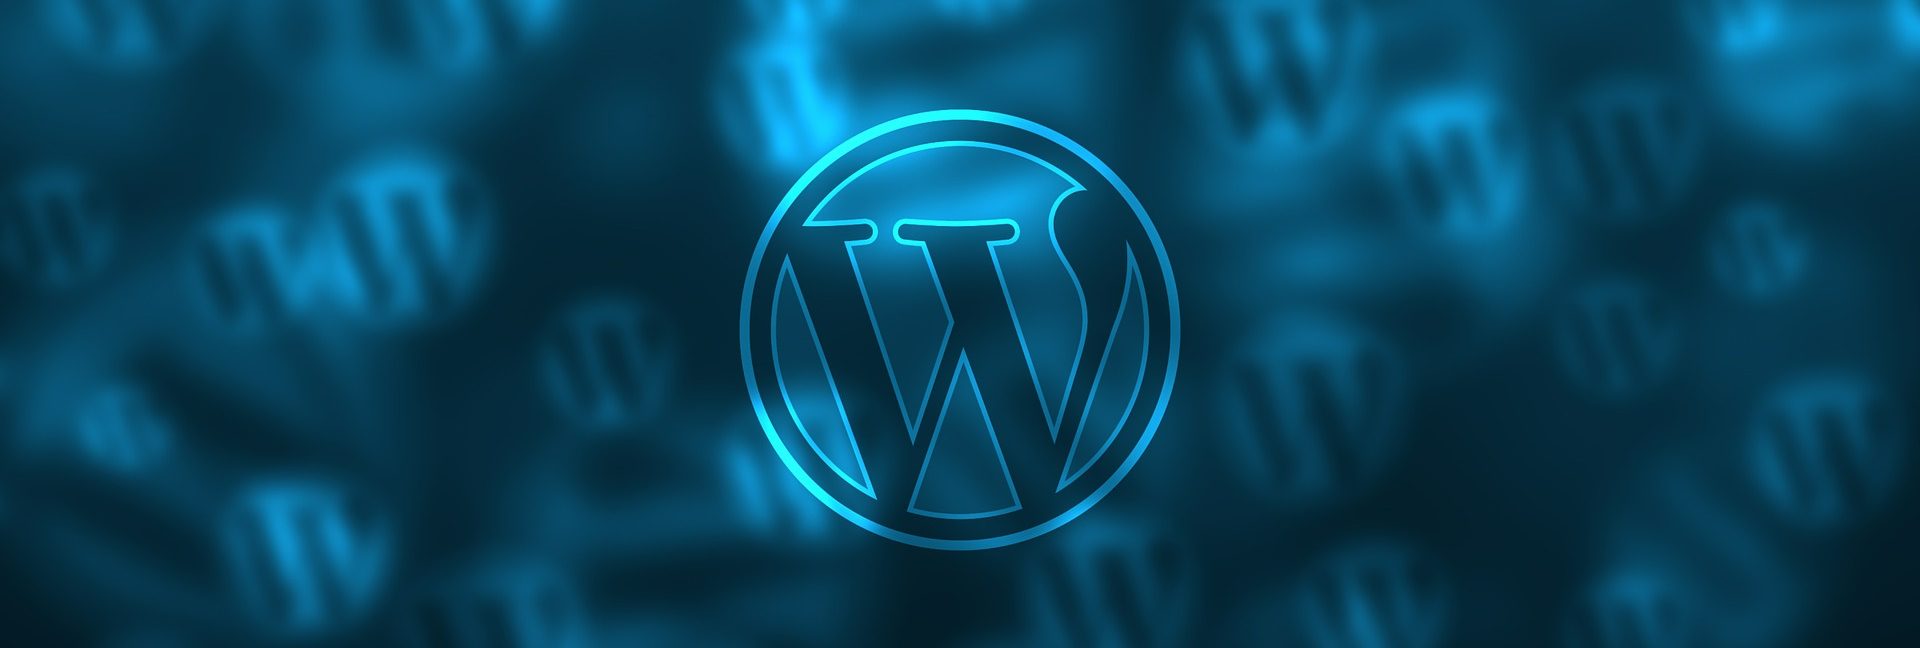 WordPress logo banner